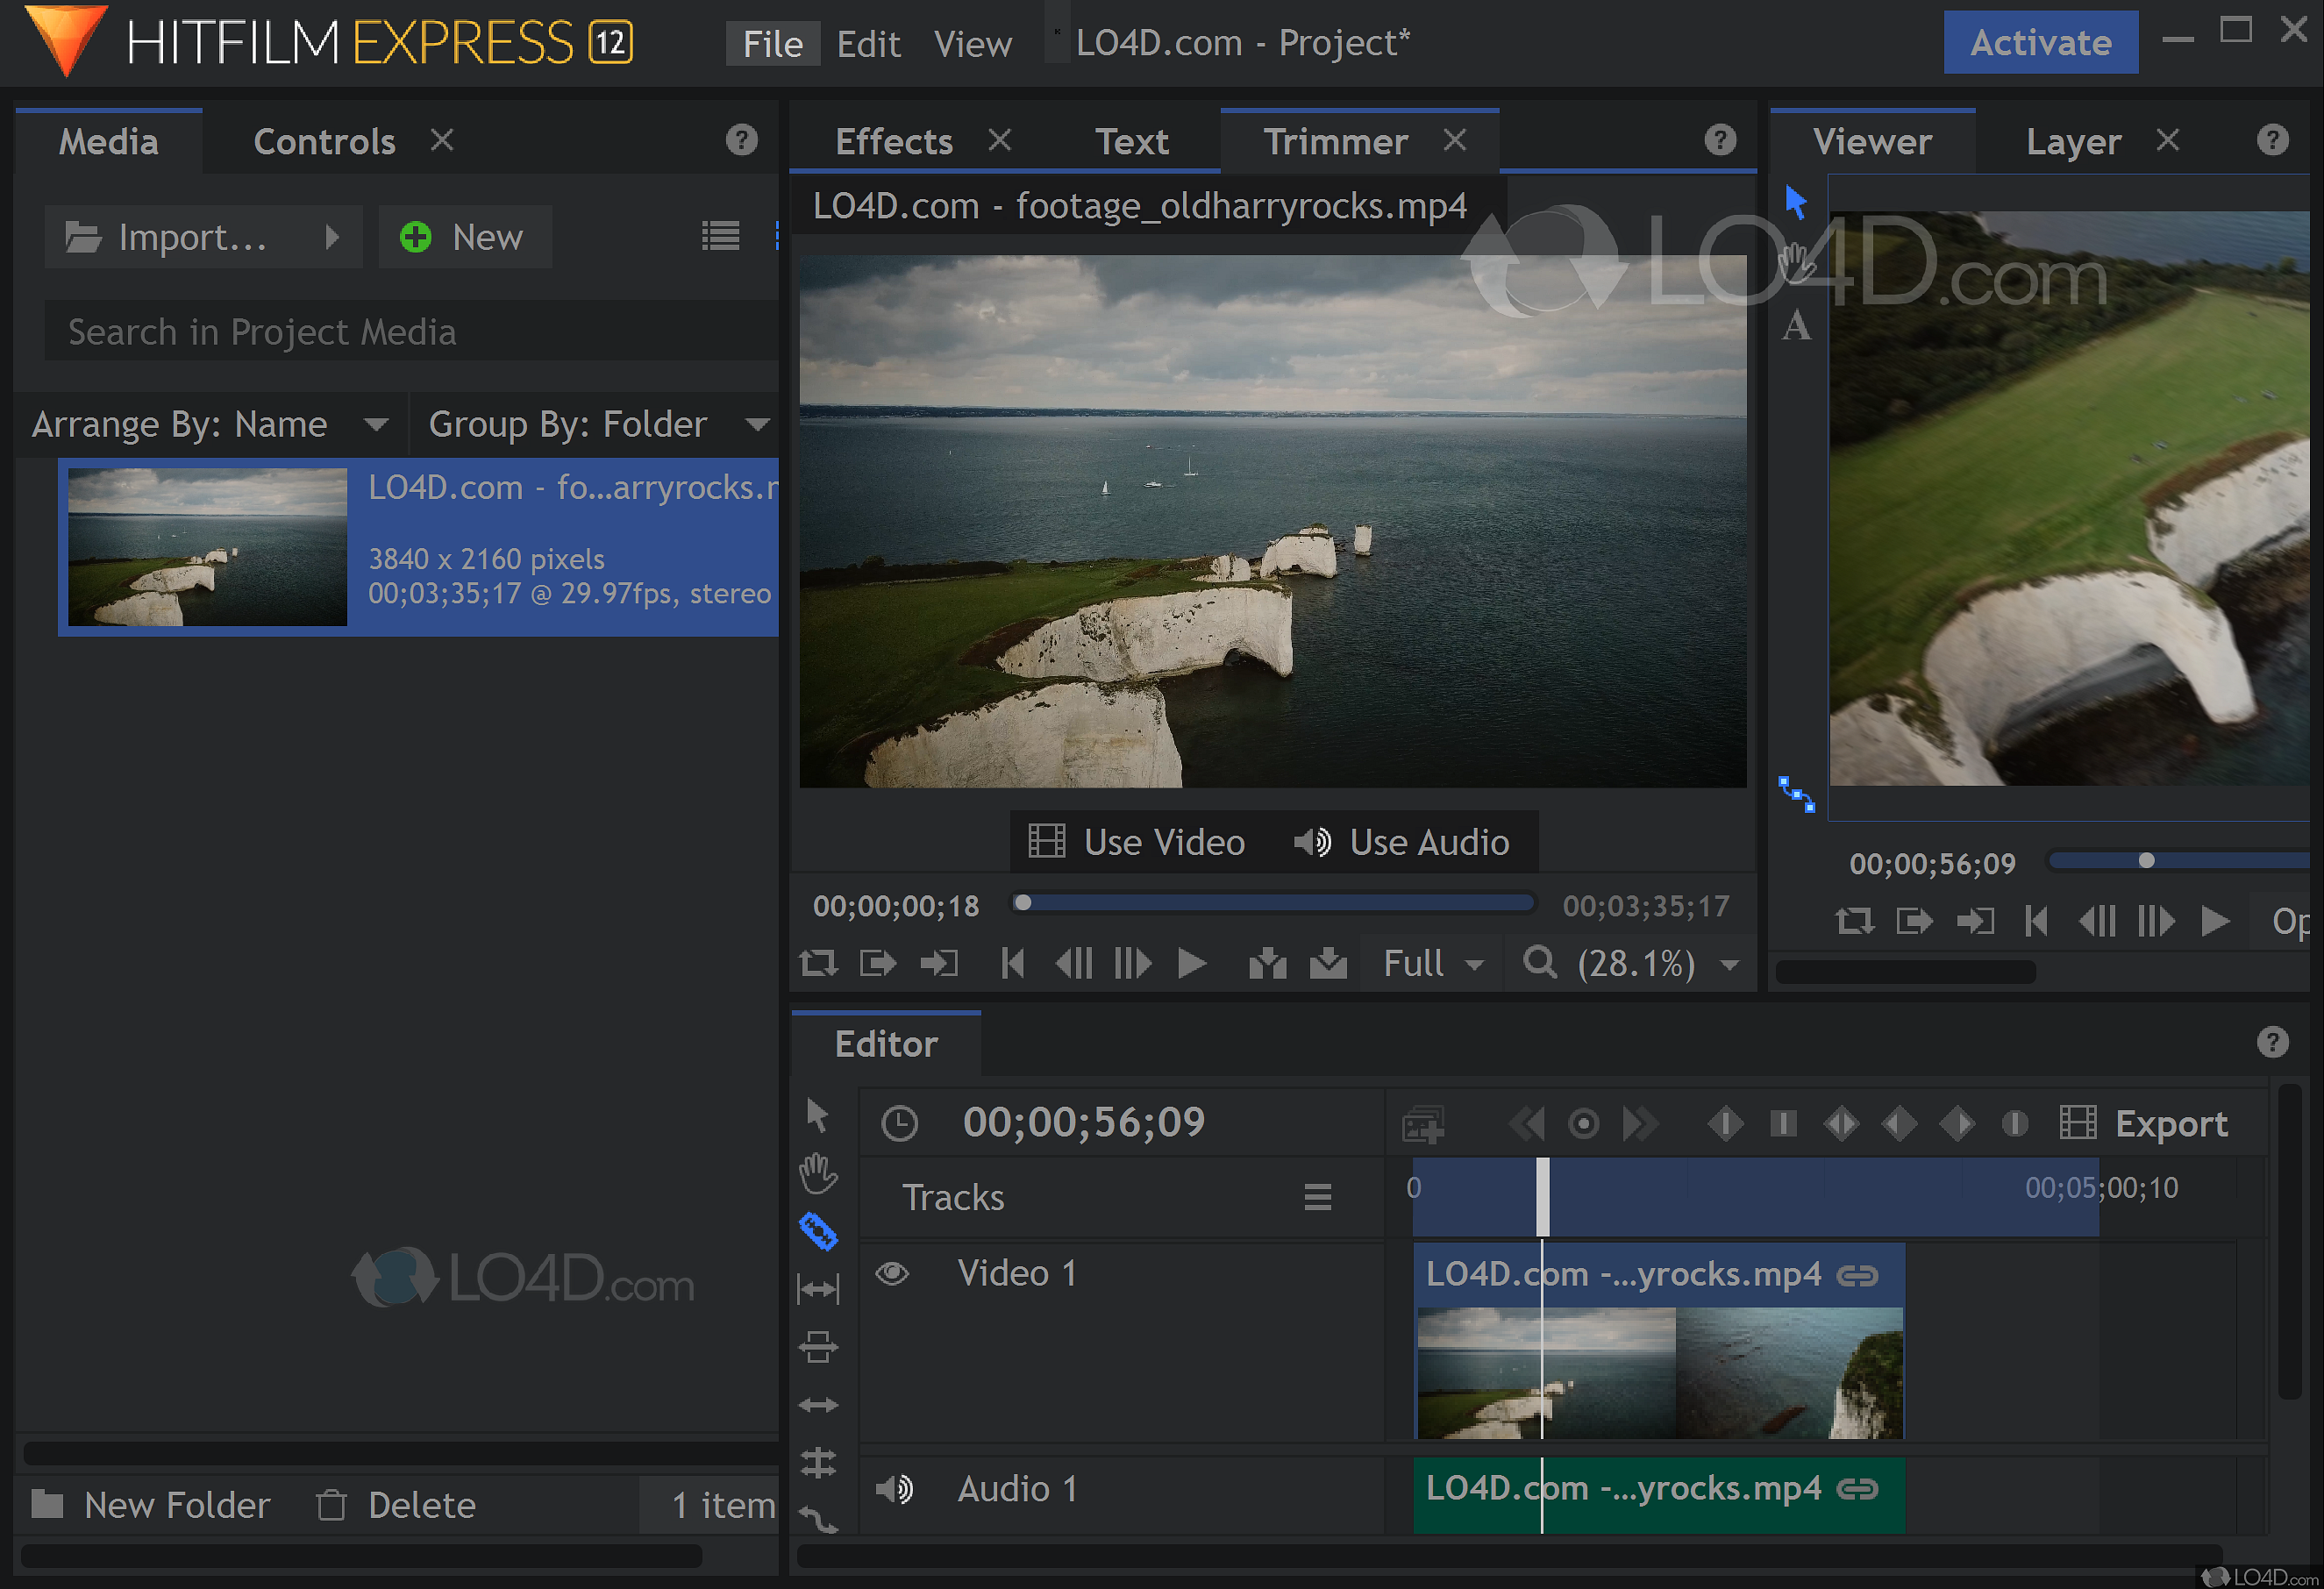 hitfilm 4 express free download for windows 10 64 bit